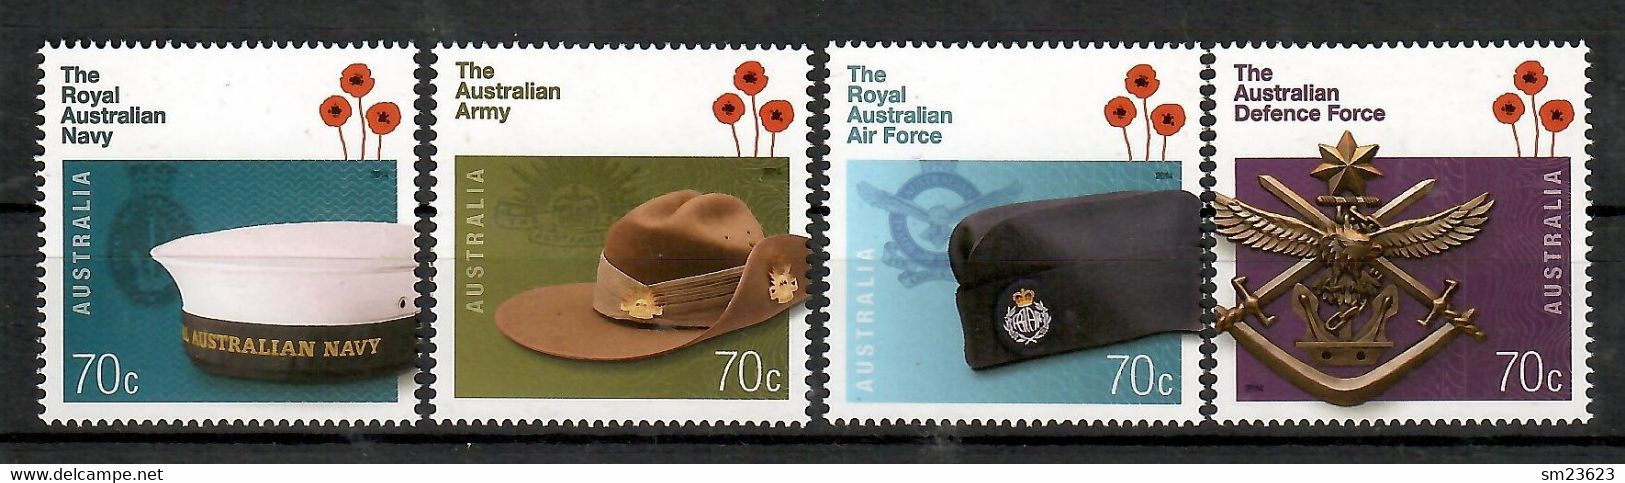 Australien 2014 Mi.Nr. 4212 / 4215 , A Century Of Service - The Australian Defence Force - Postfrisch / MNH / (**) - Mint Stamps